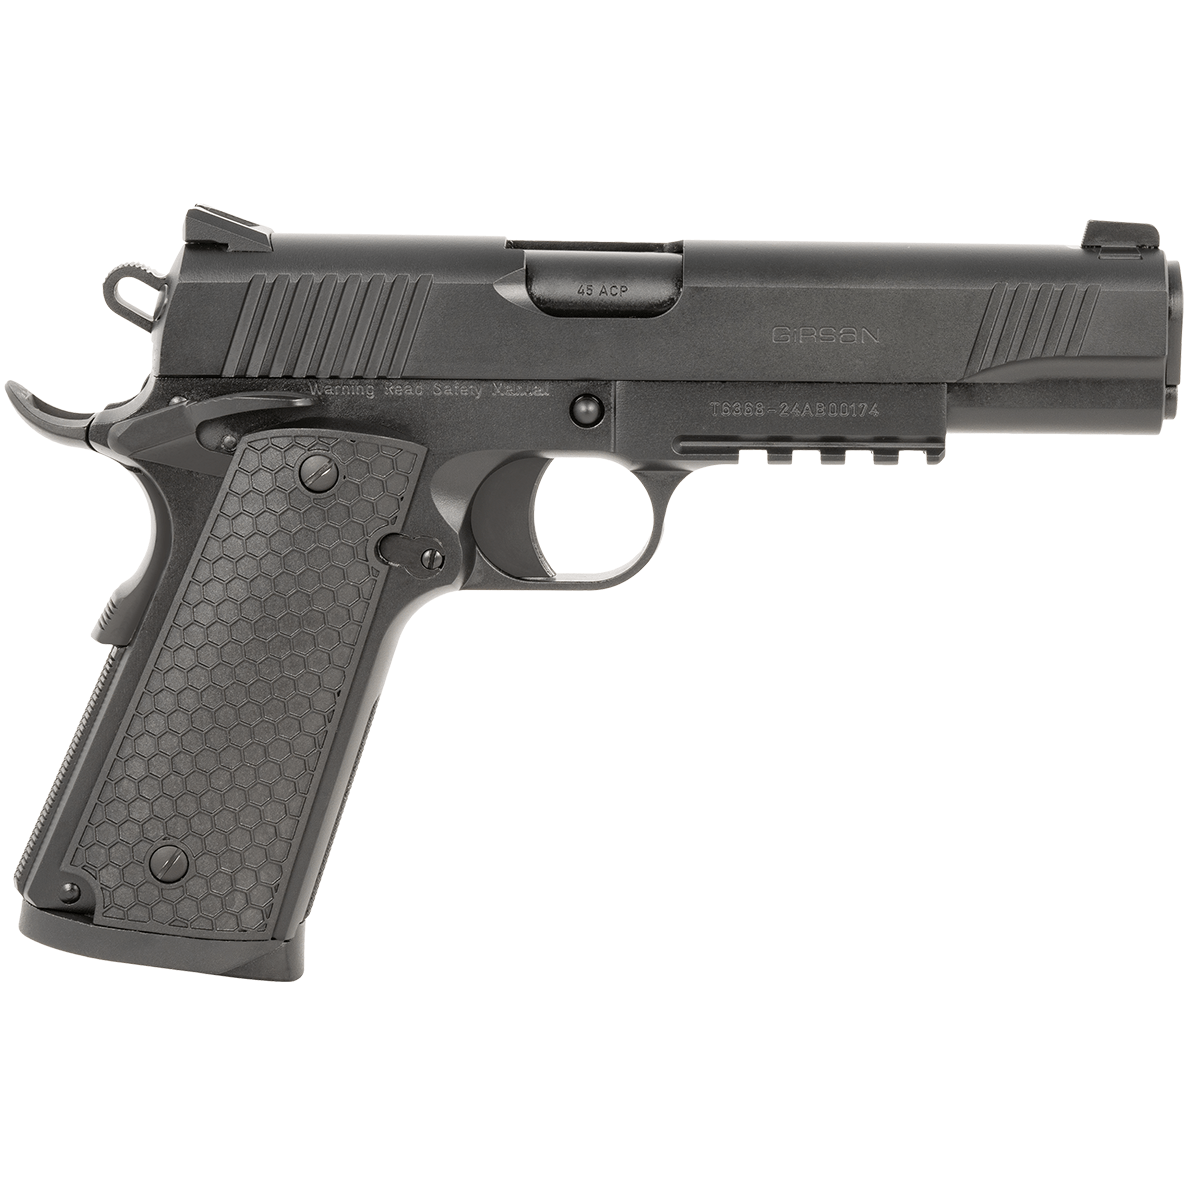 Girsan 392060 MC1911 S Untouchable Full Size 45 ACP 1911 Semi Automatic Handgun